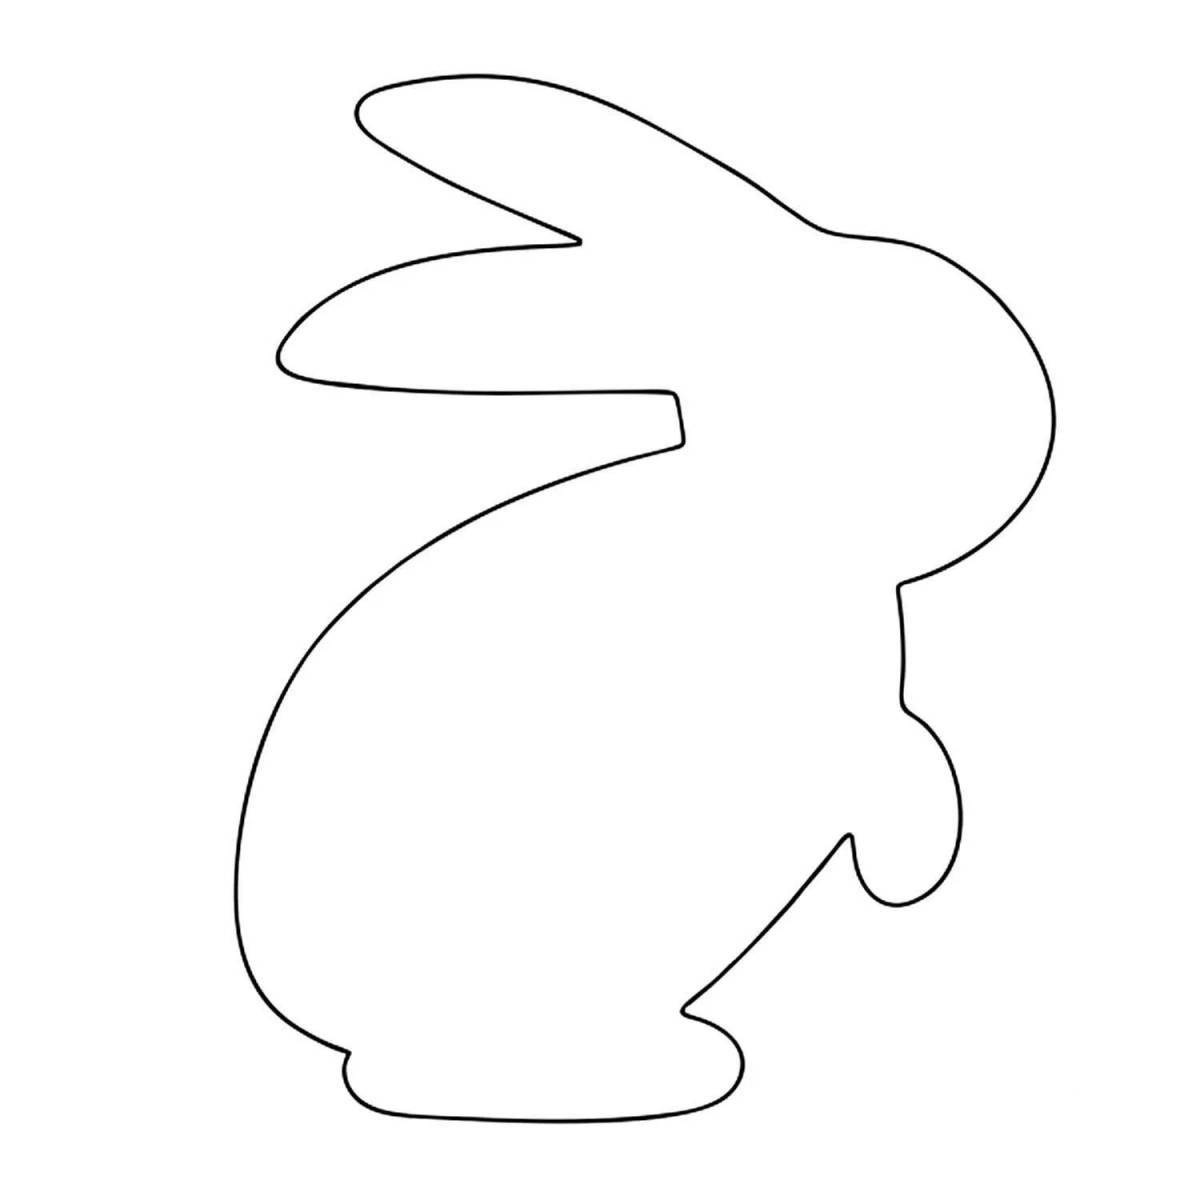 Playful rabbit coloring